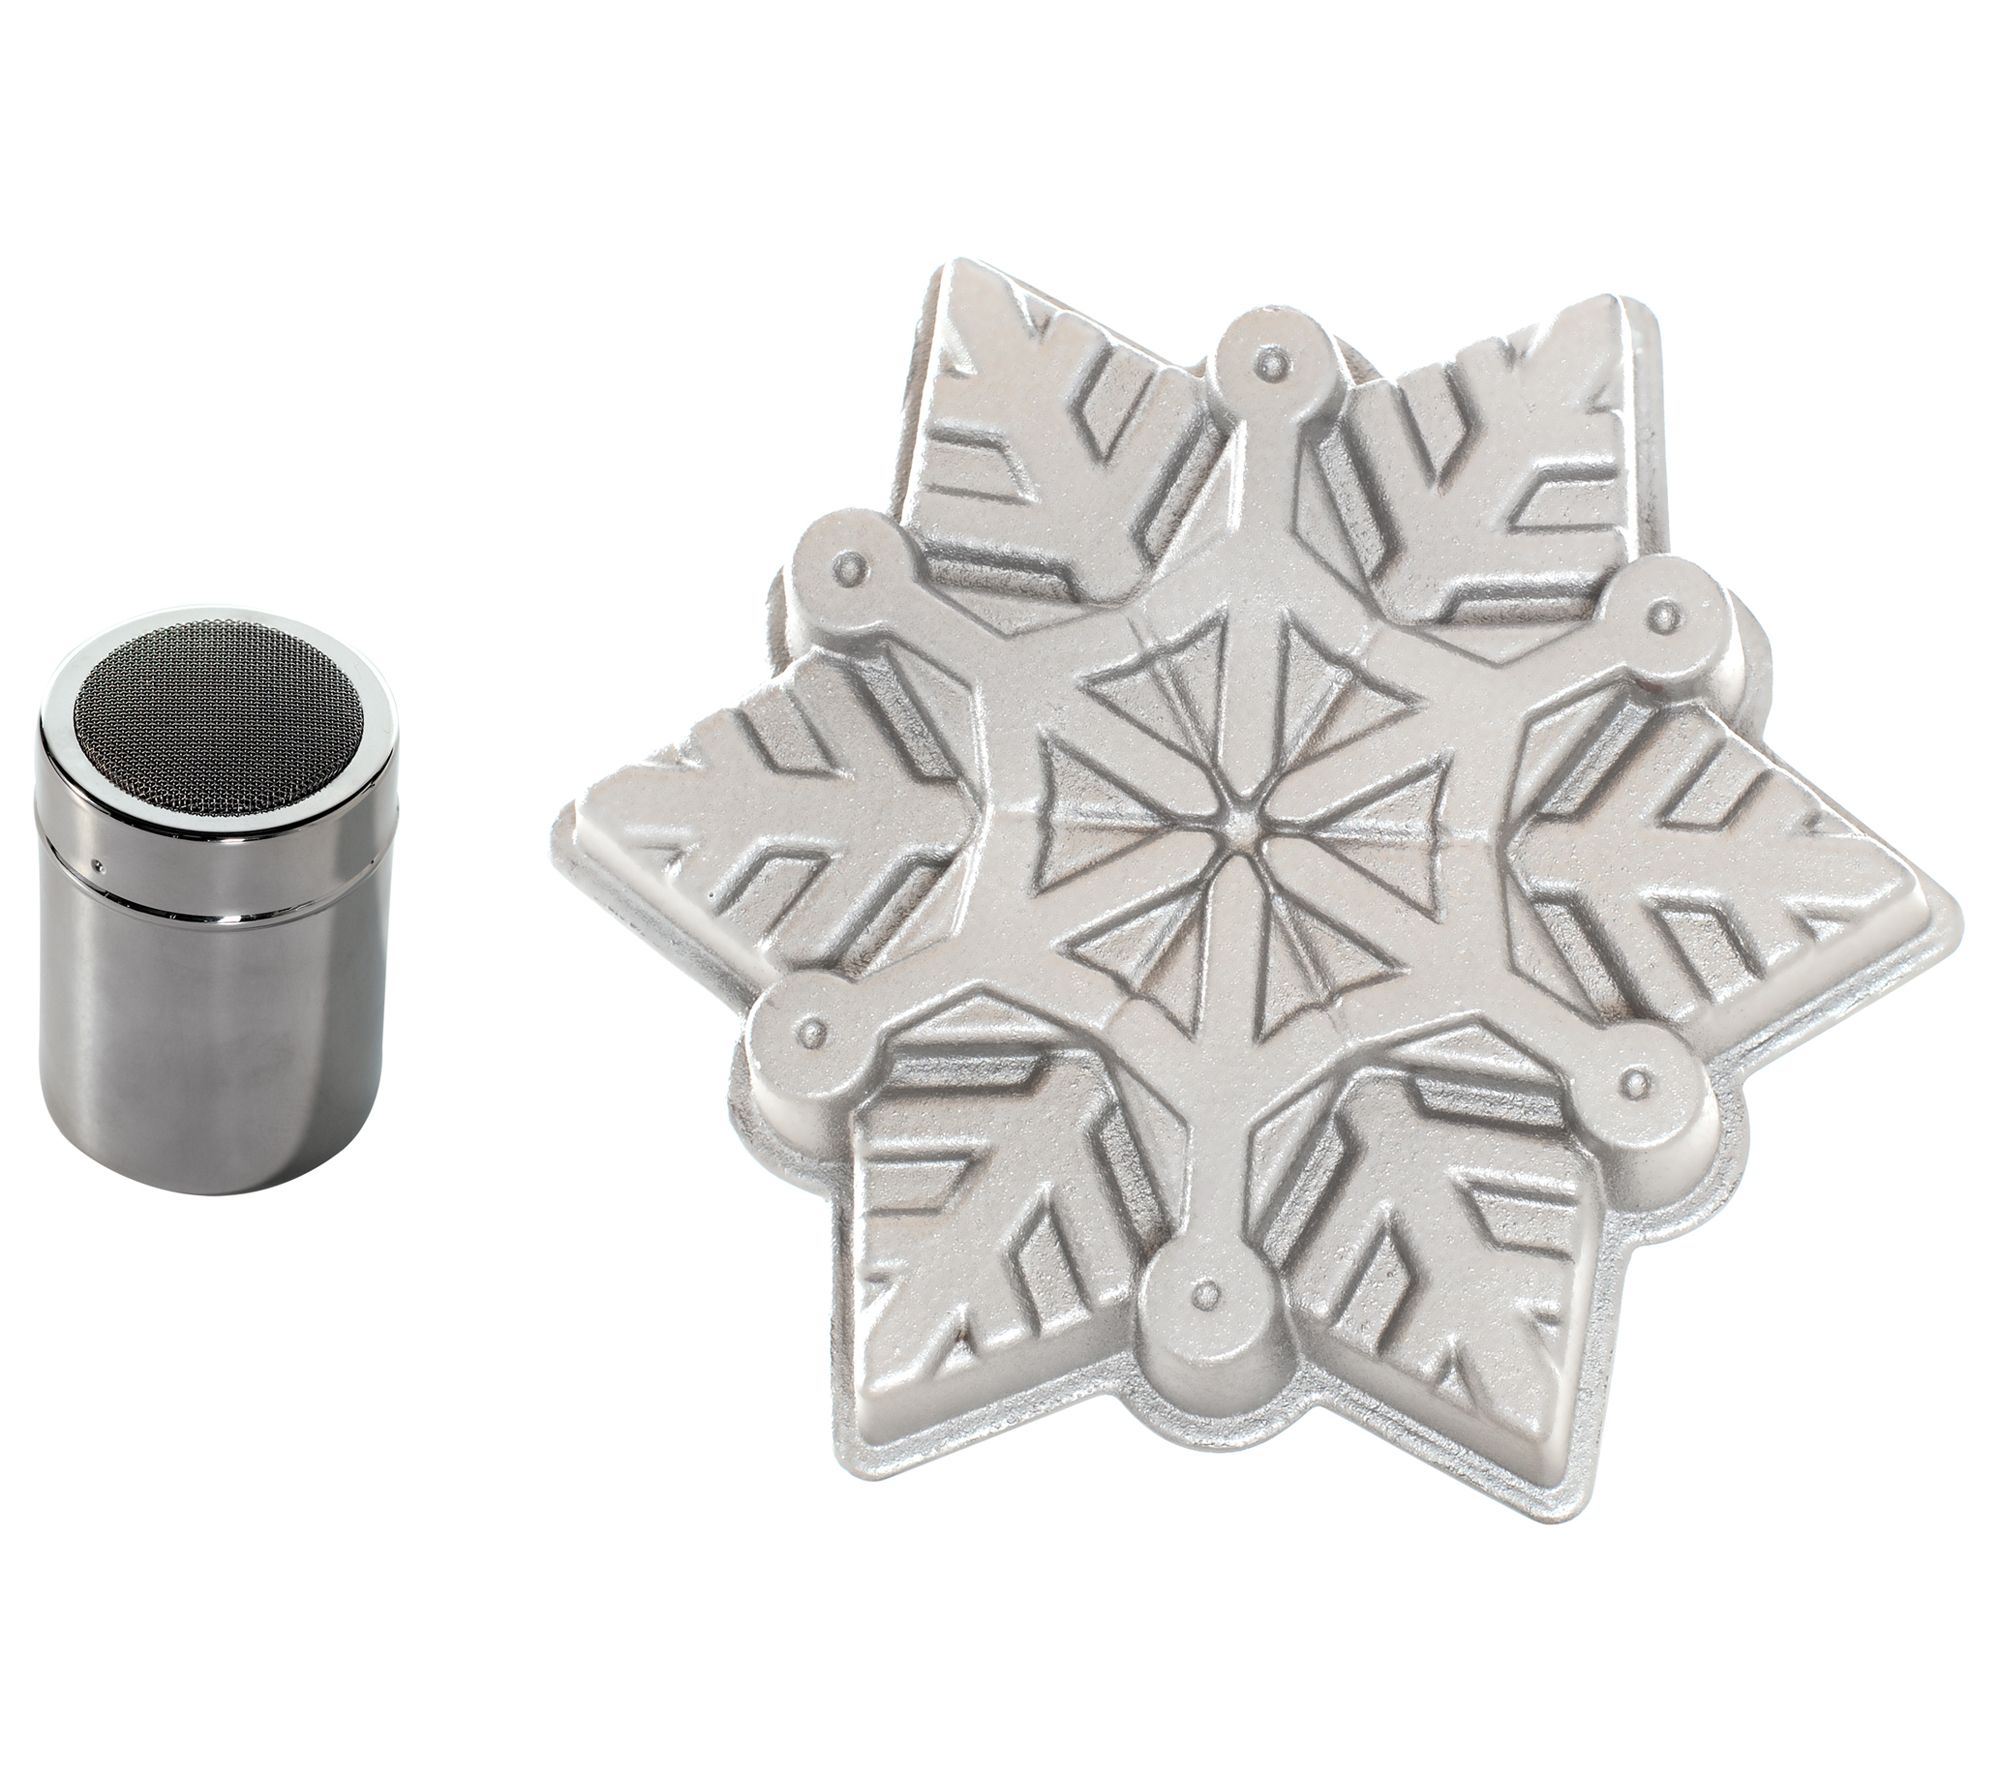  Nordic Ware Snowflake Pan: Home & Kitchen